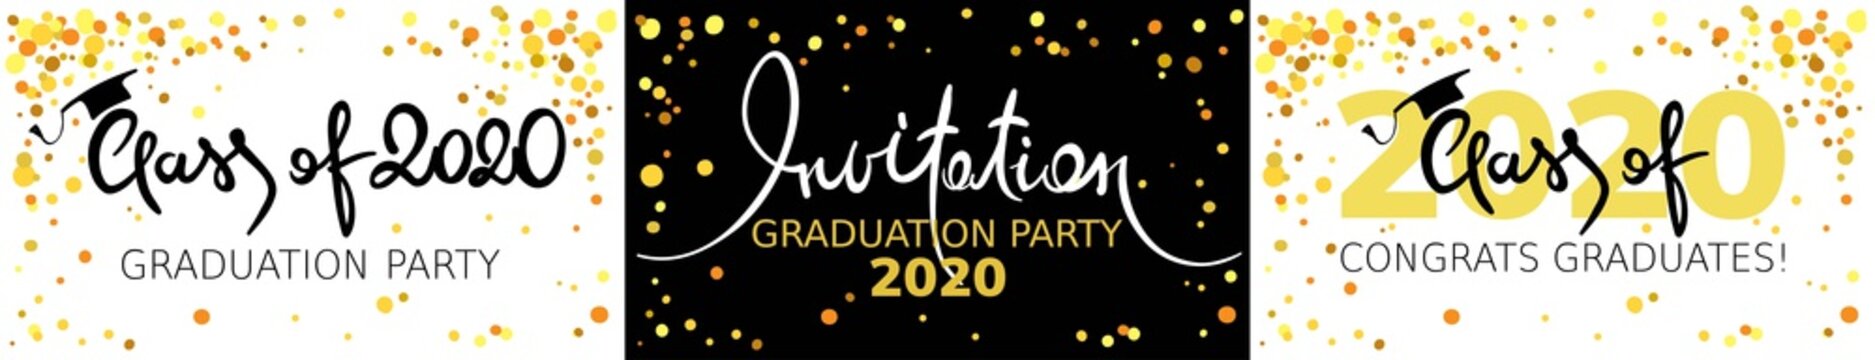 Graduate 2020. Vector illustration, card, invitation with gold confetti and calligraphic title.